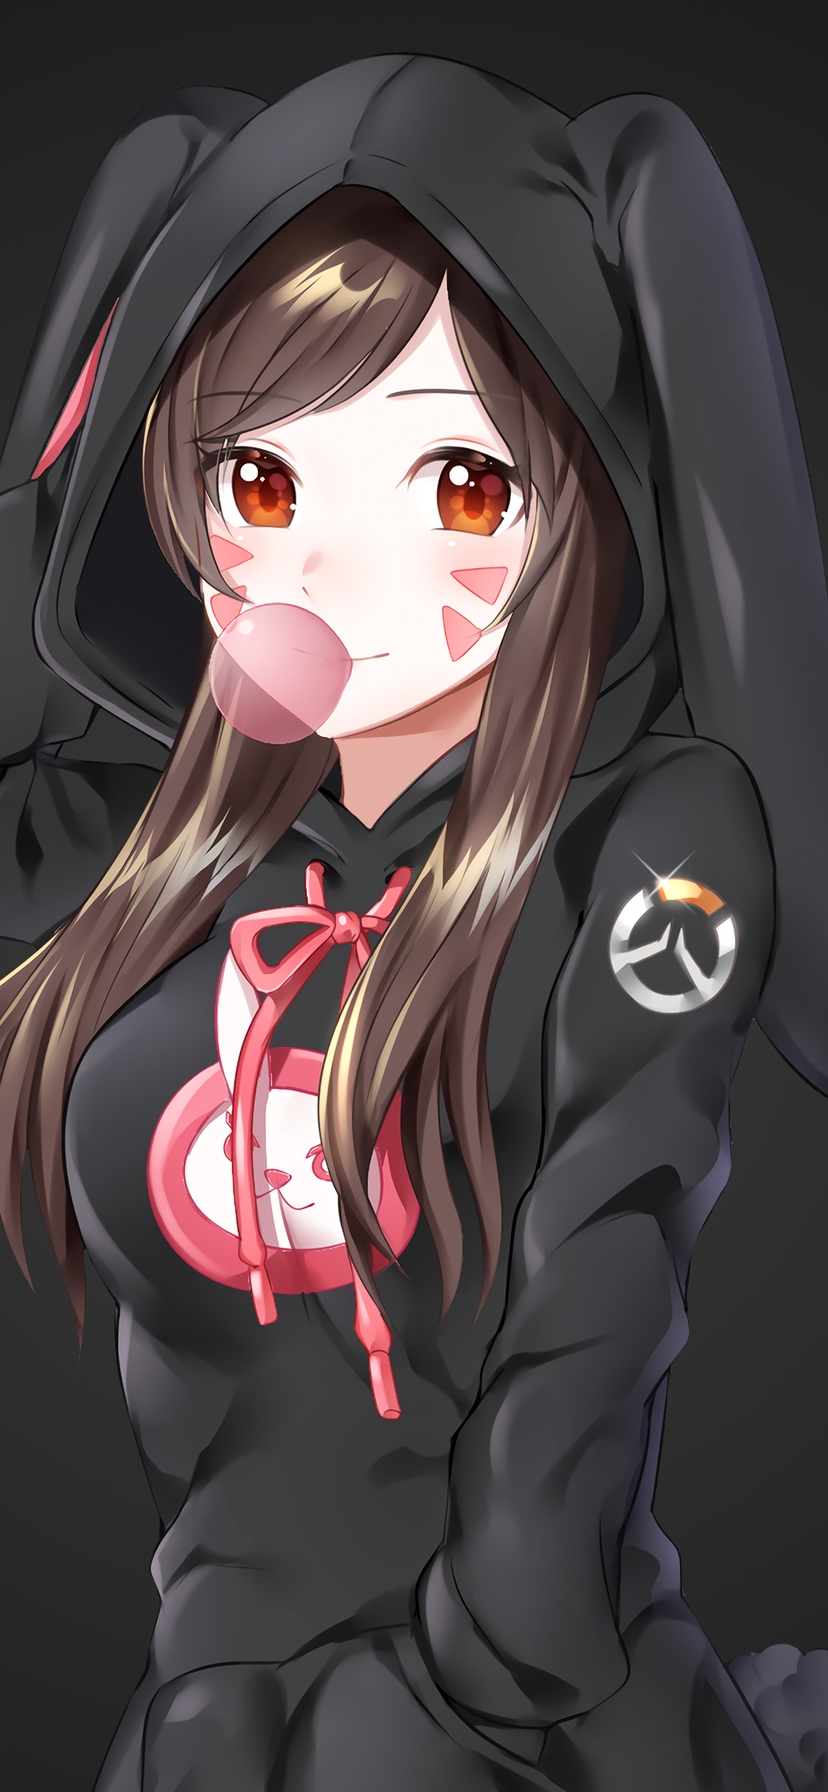 Image: Girl, gum, bubble, jacket, hair, hood, ears, dark background, Overwatch